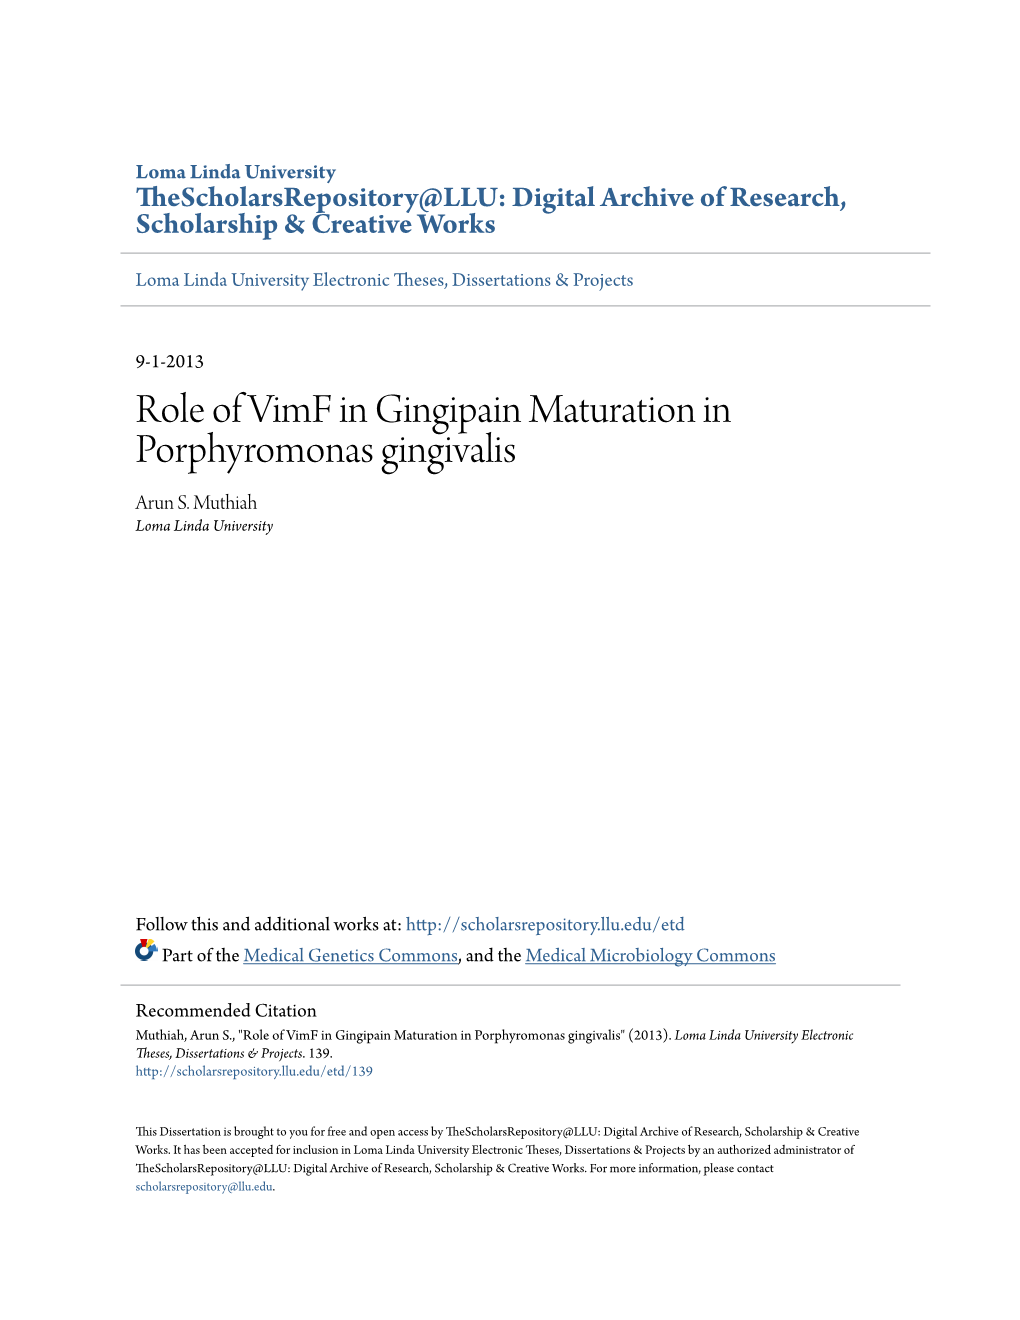 Role of Vimf in Gingipain Maturation in Porphyromonas Gingivalis Arun S